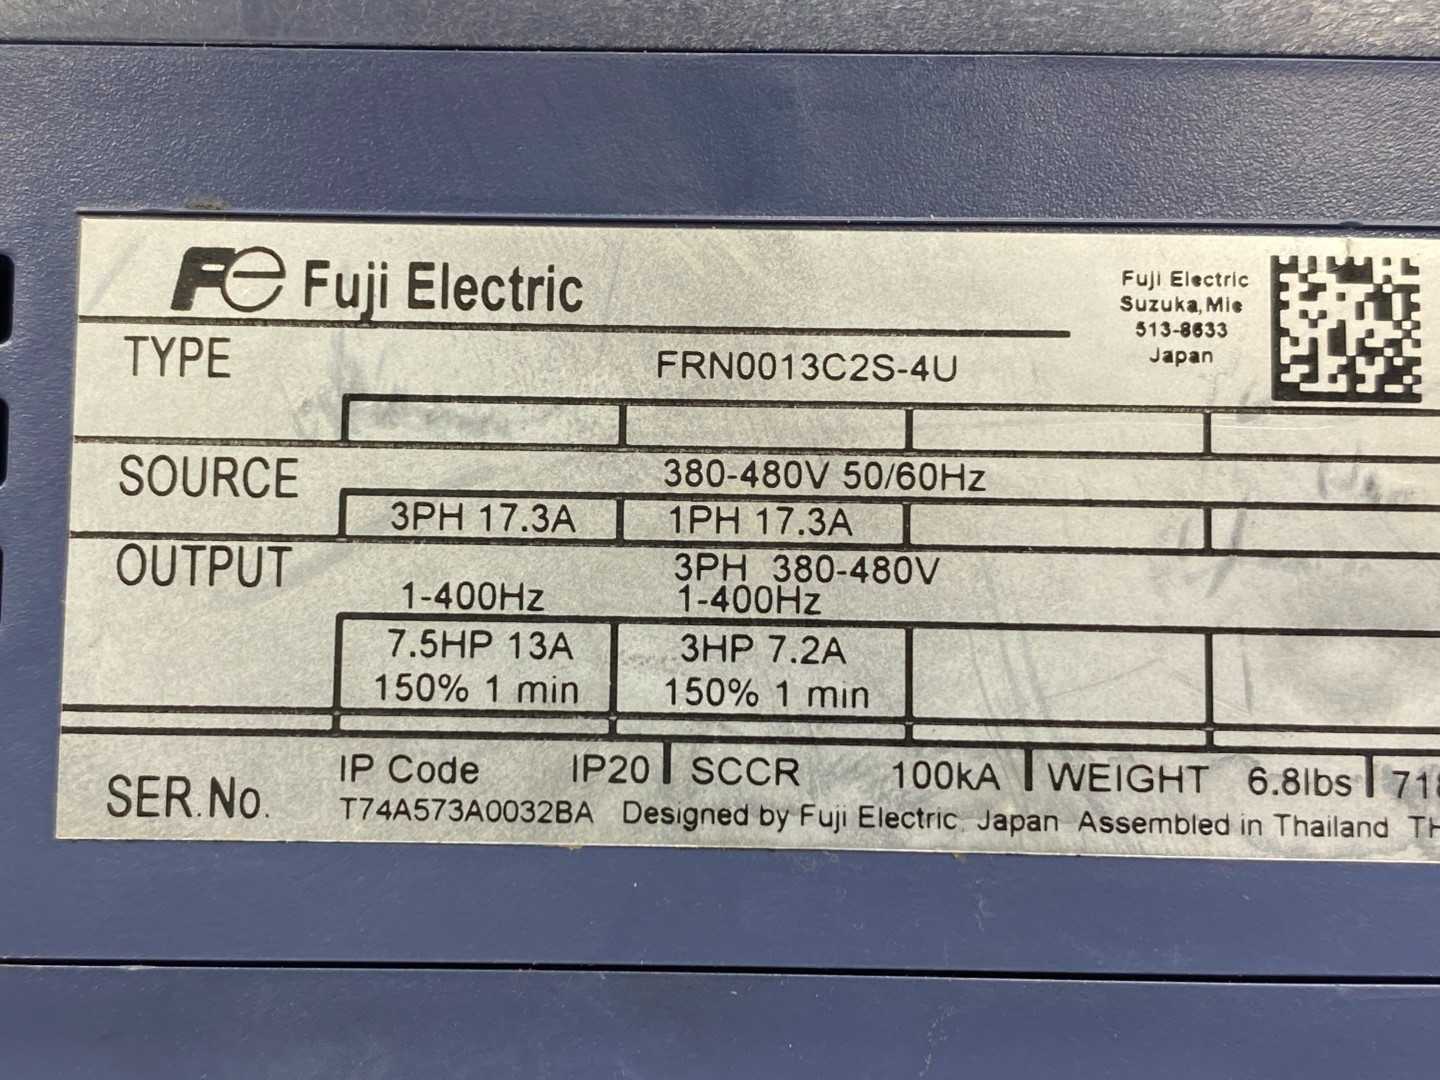 Fuji Electric FRN0013C2S-4U  Frenic-Mini Compact Inverter